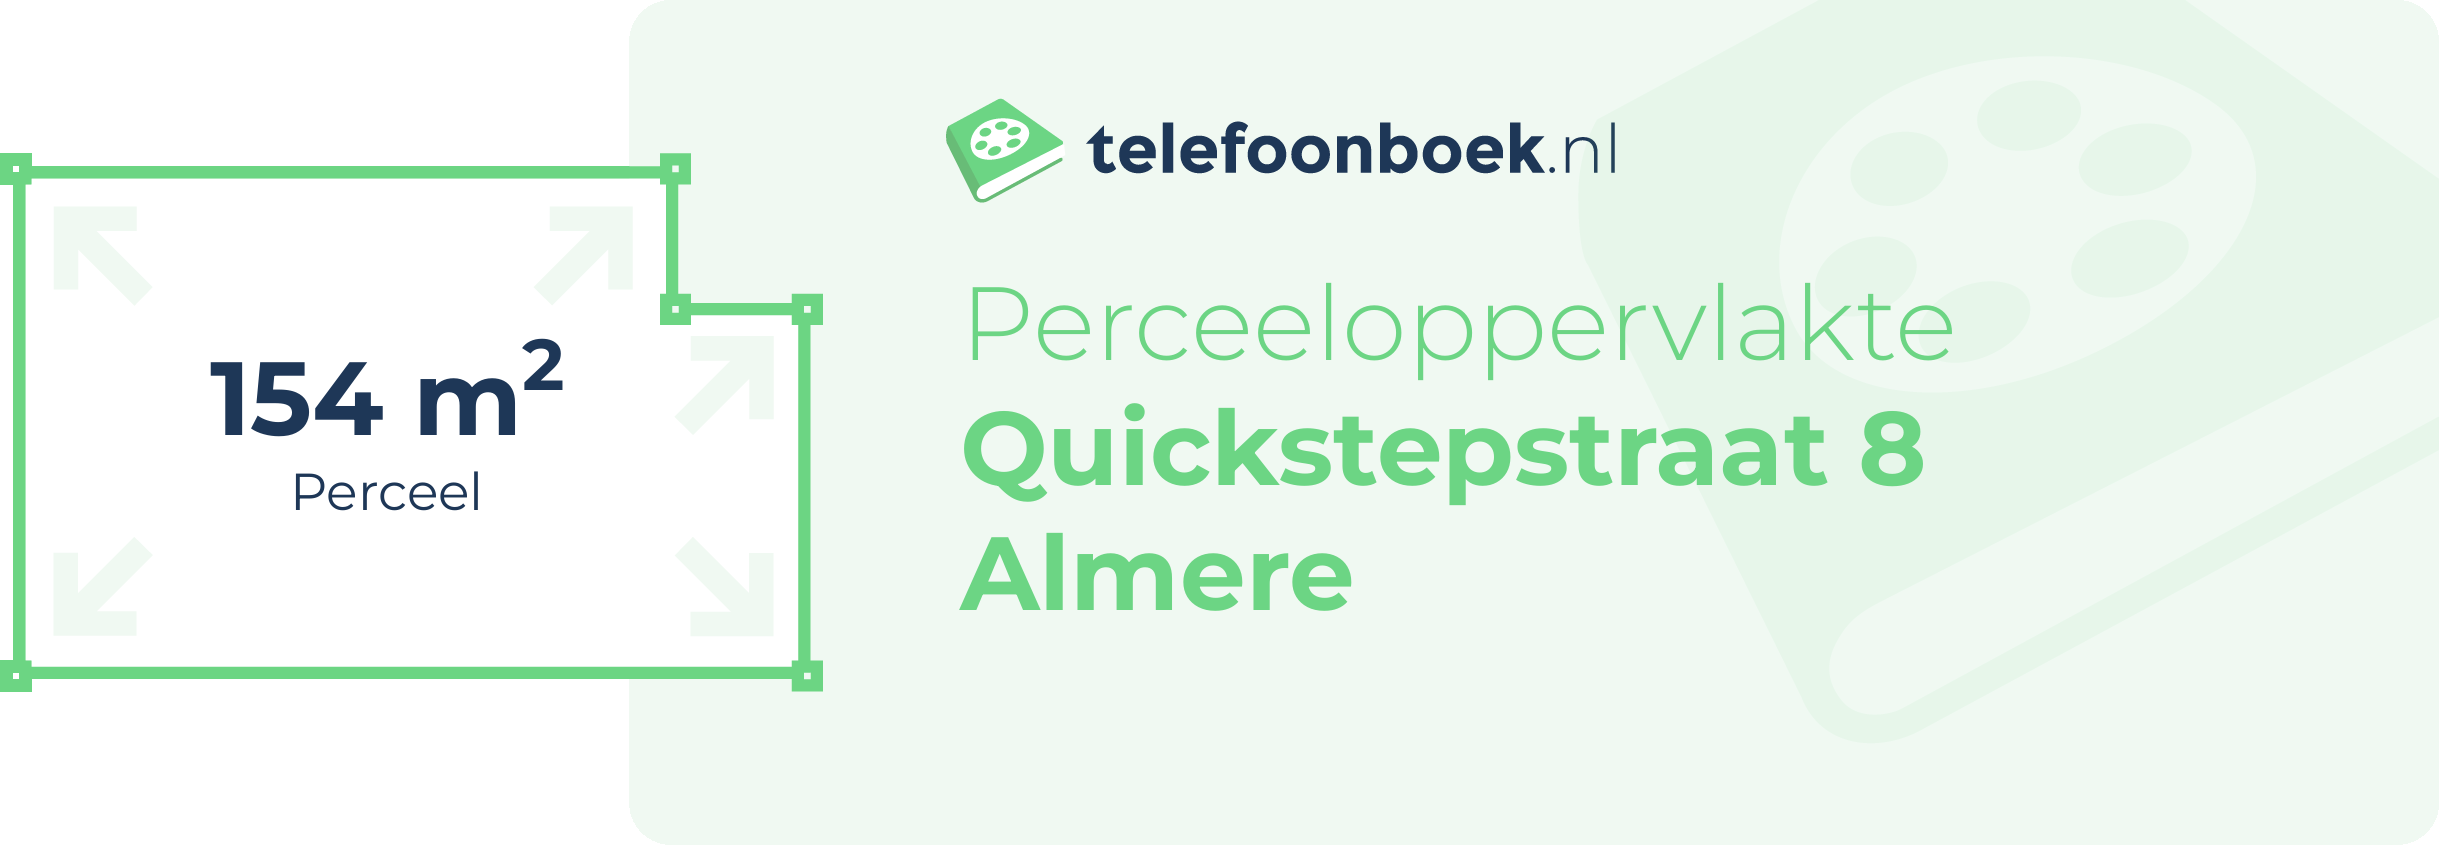 Perceeloppervlakte Quickstepstraat 8 Almere